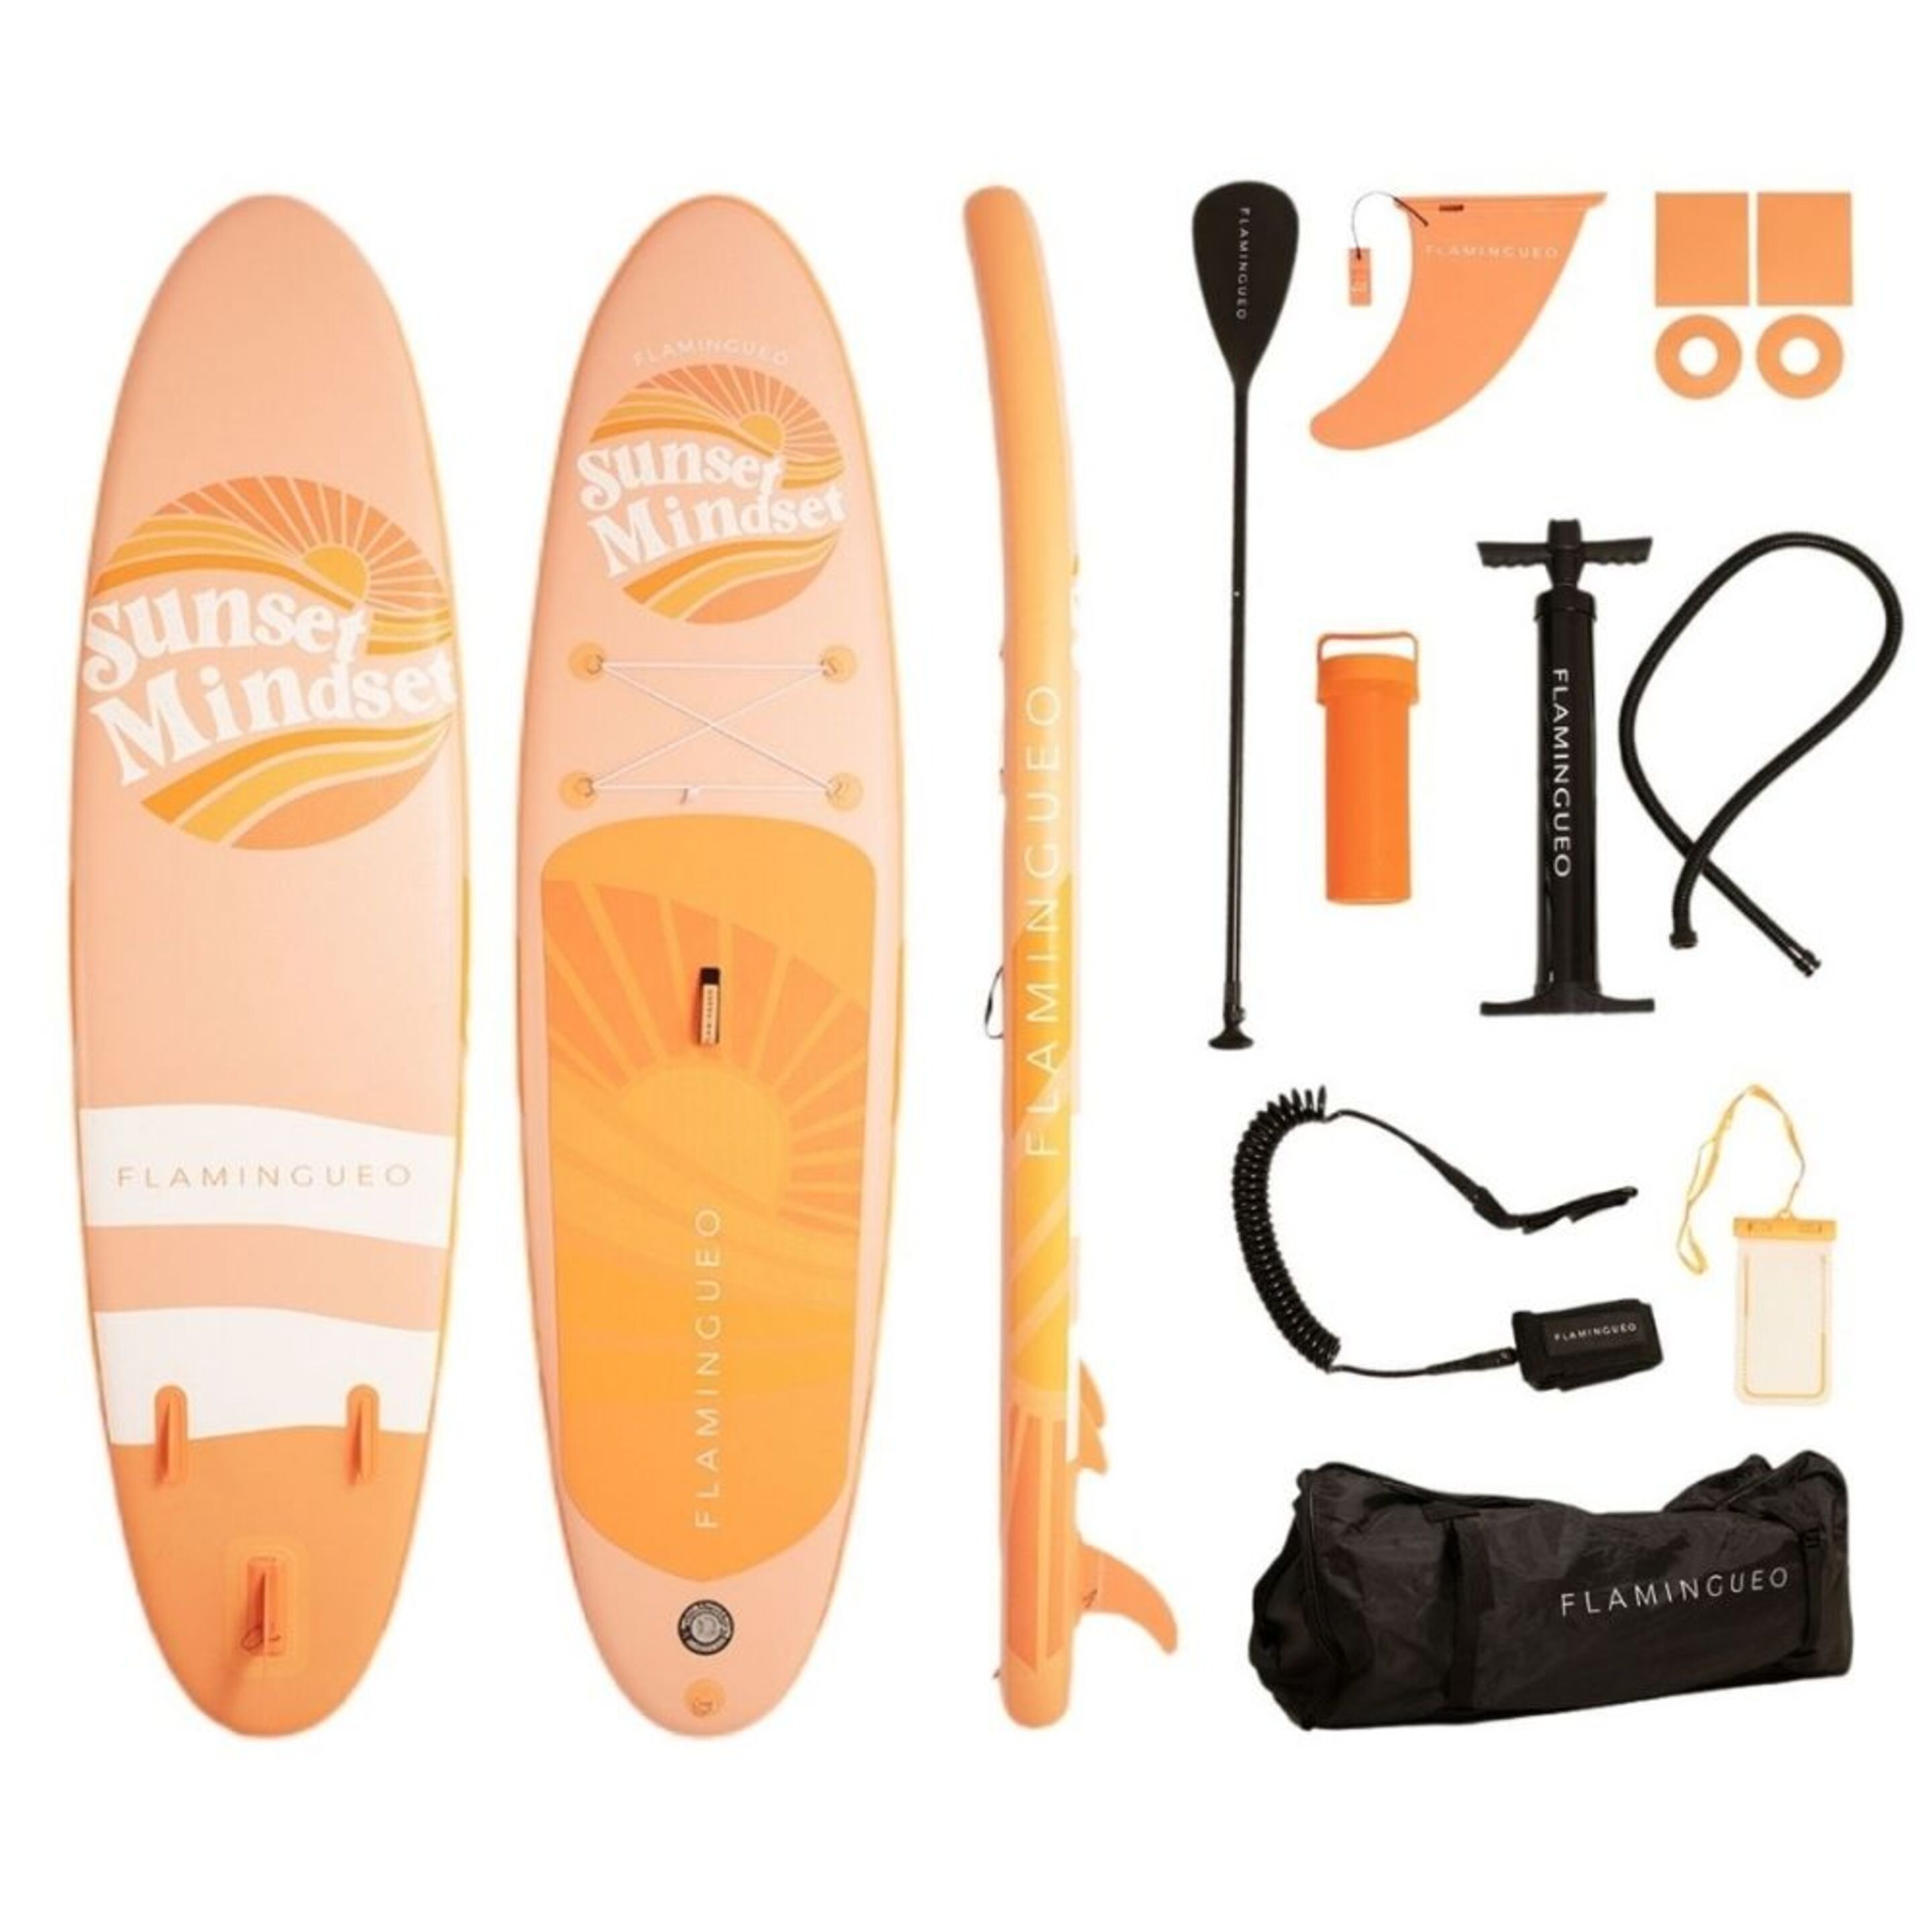 Tabla Paddle Surf Sunset Minded Kit Completo